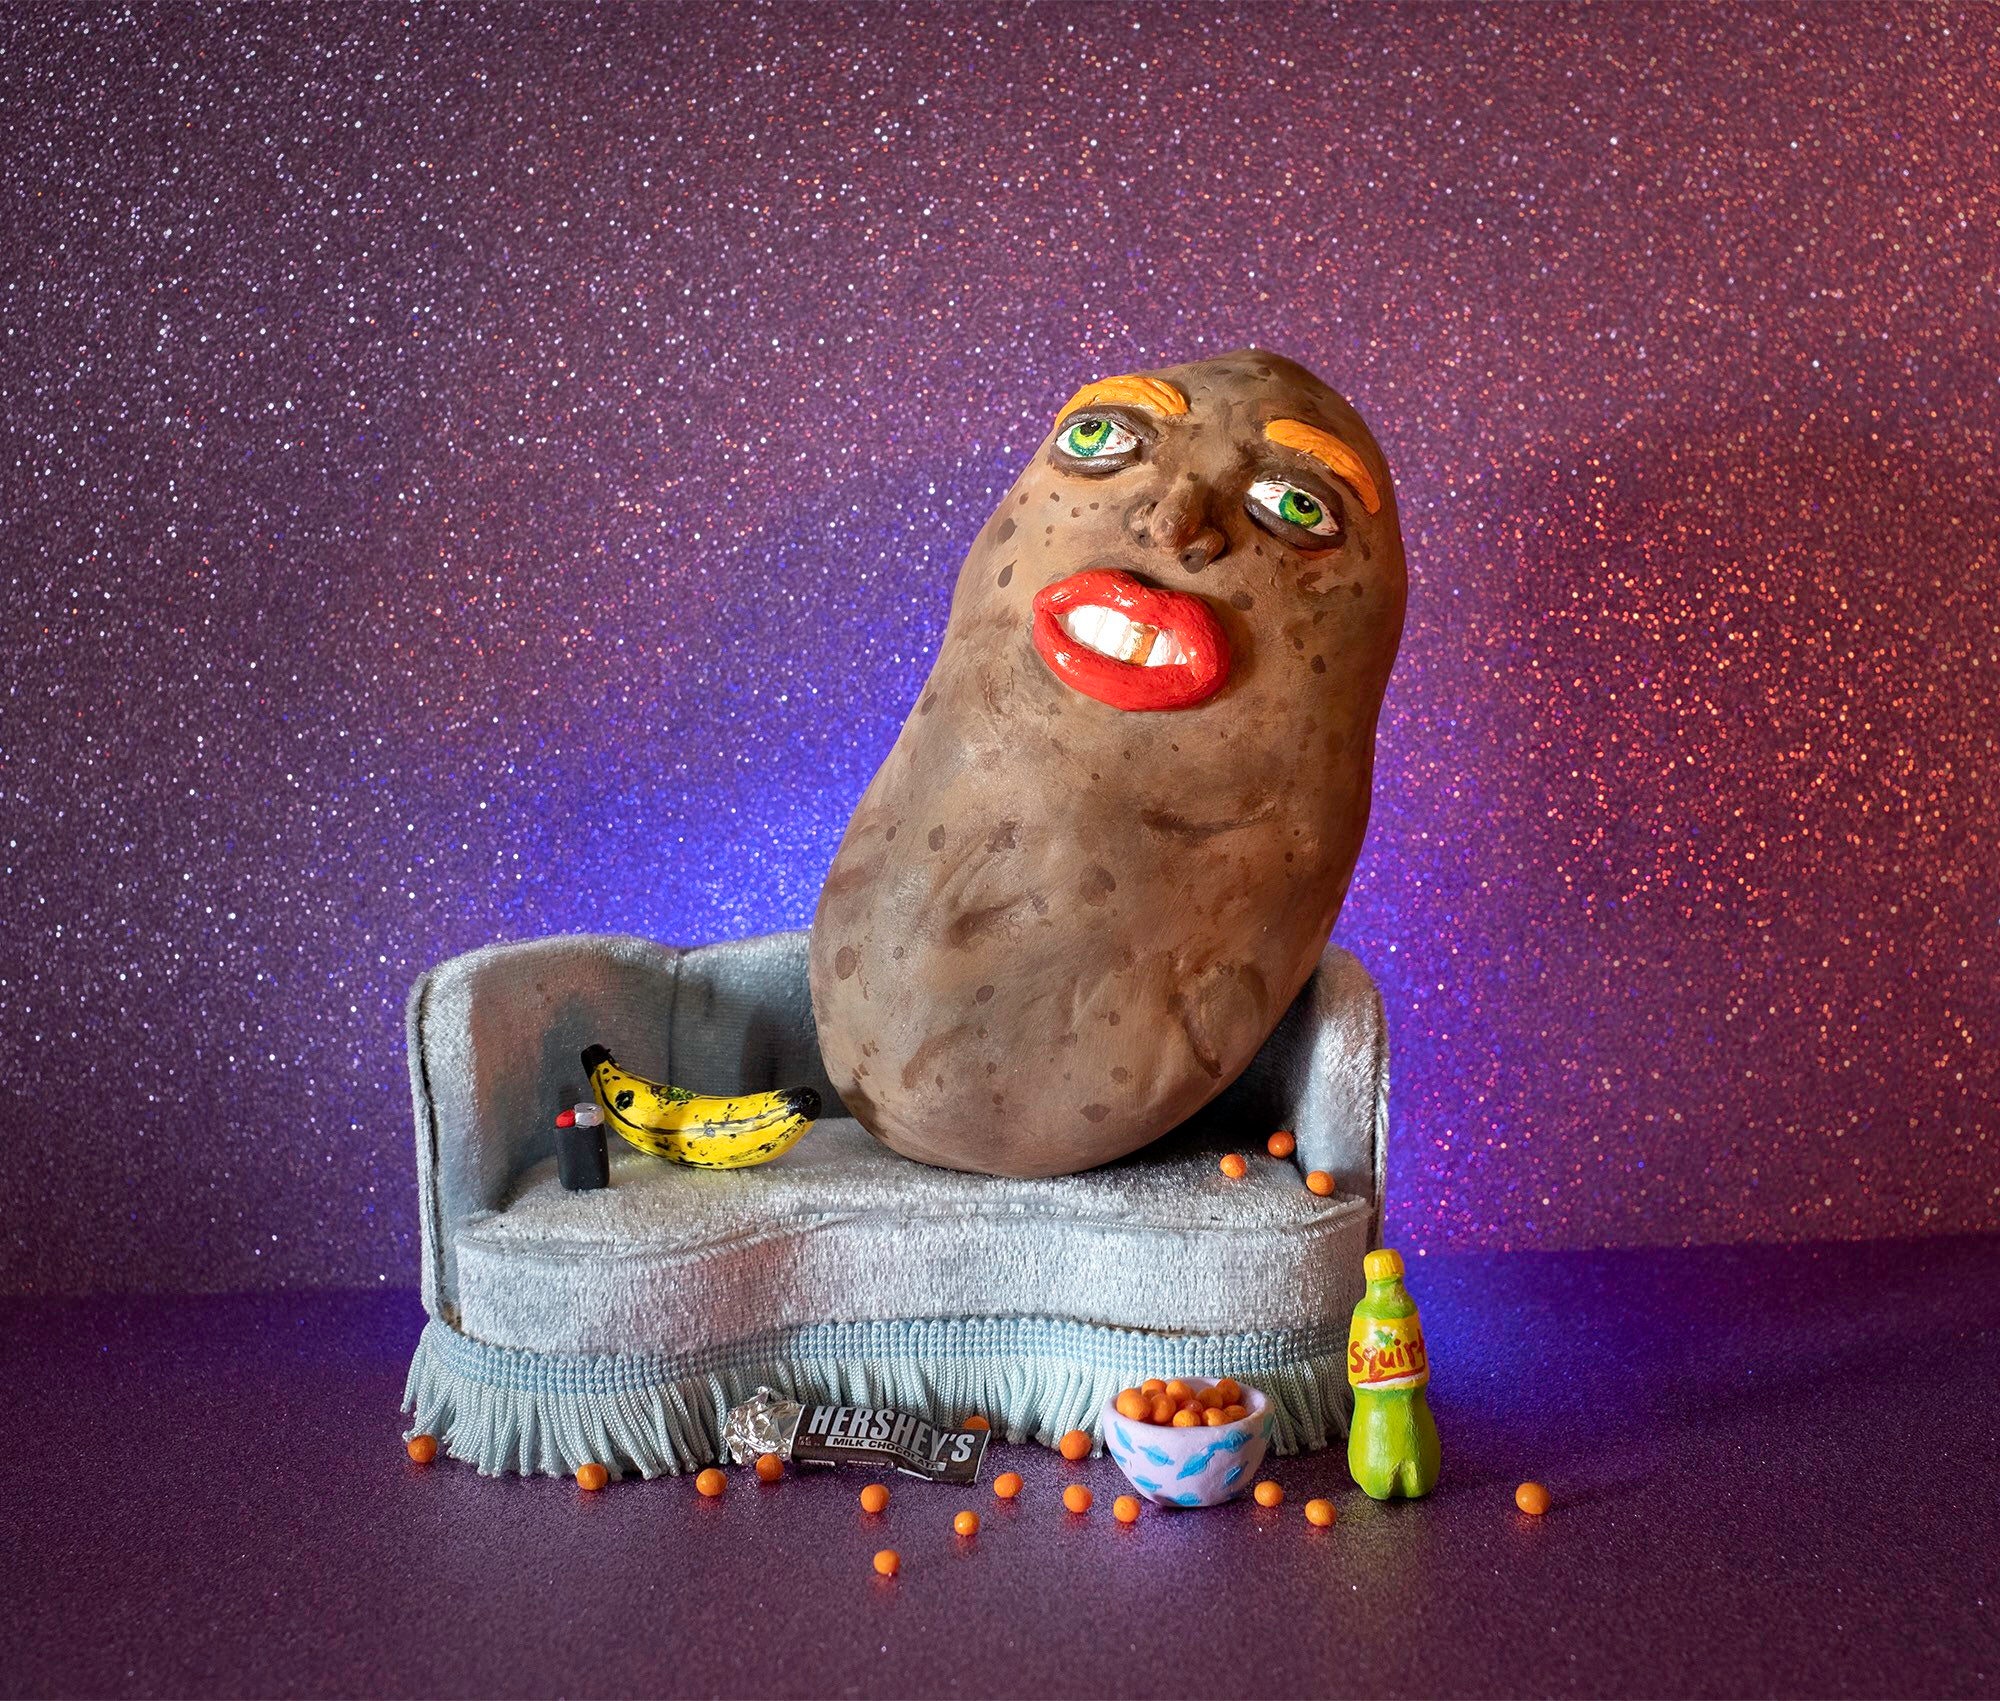 Couch Potato by Mummrelic on DeviantArt